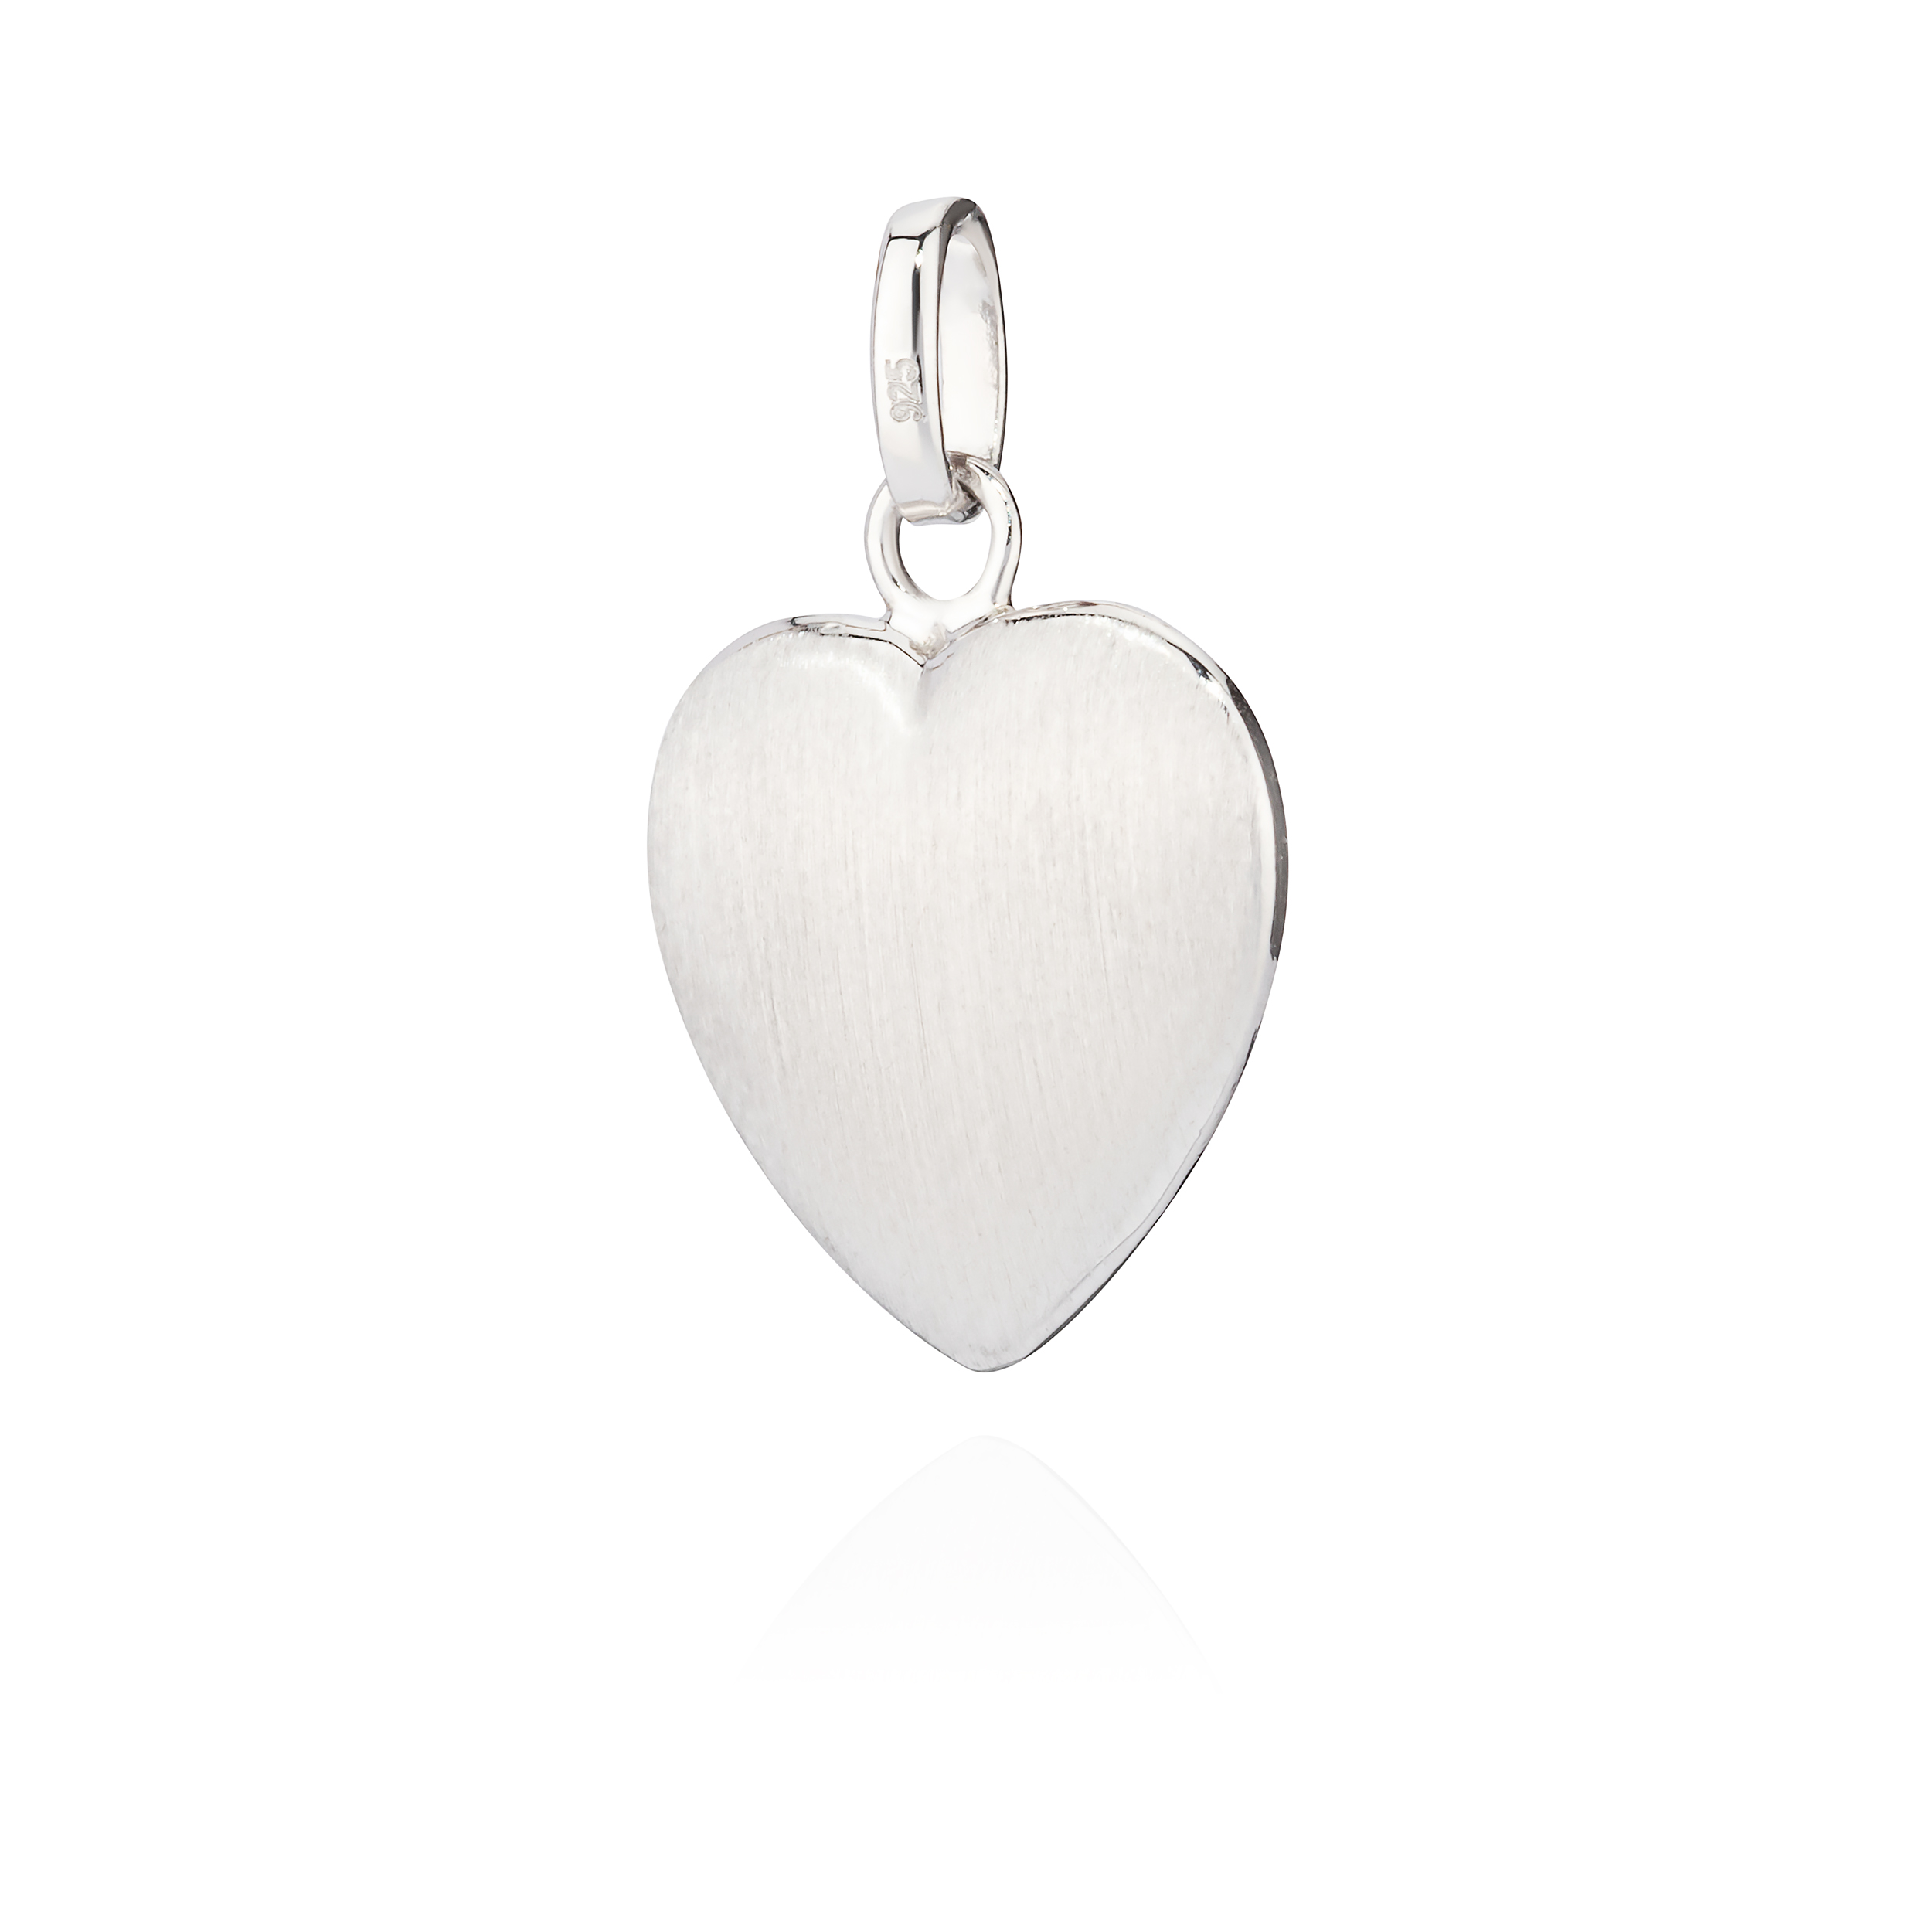 Kettenanhänger kleines Herz 925 Silber glanz-matt anlaufgeschützt Amulett |  eBay | Kettenanhänger